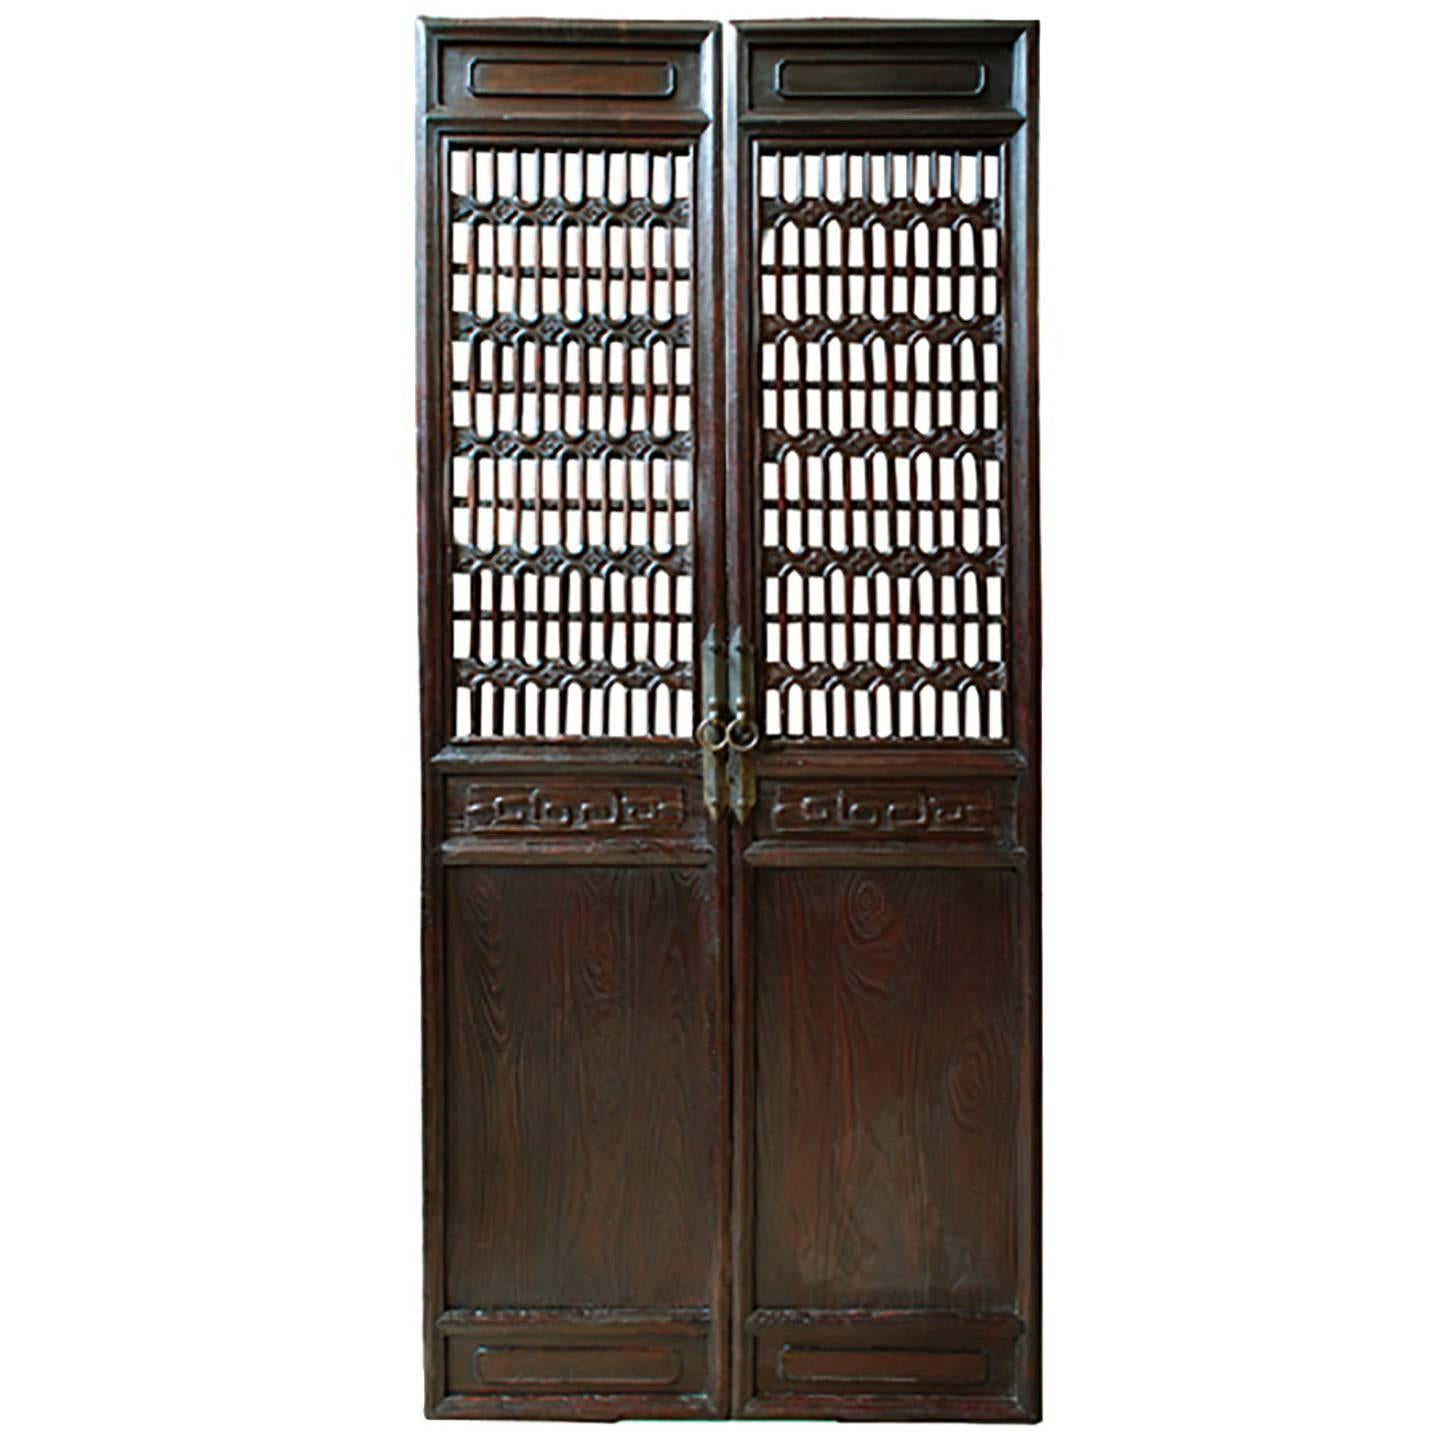 Pair of Chinese Oval Lattice Panel Doors, c. 1800